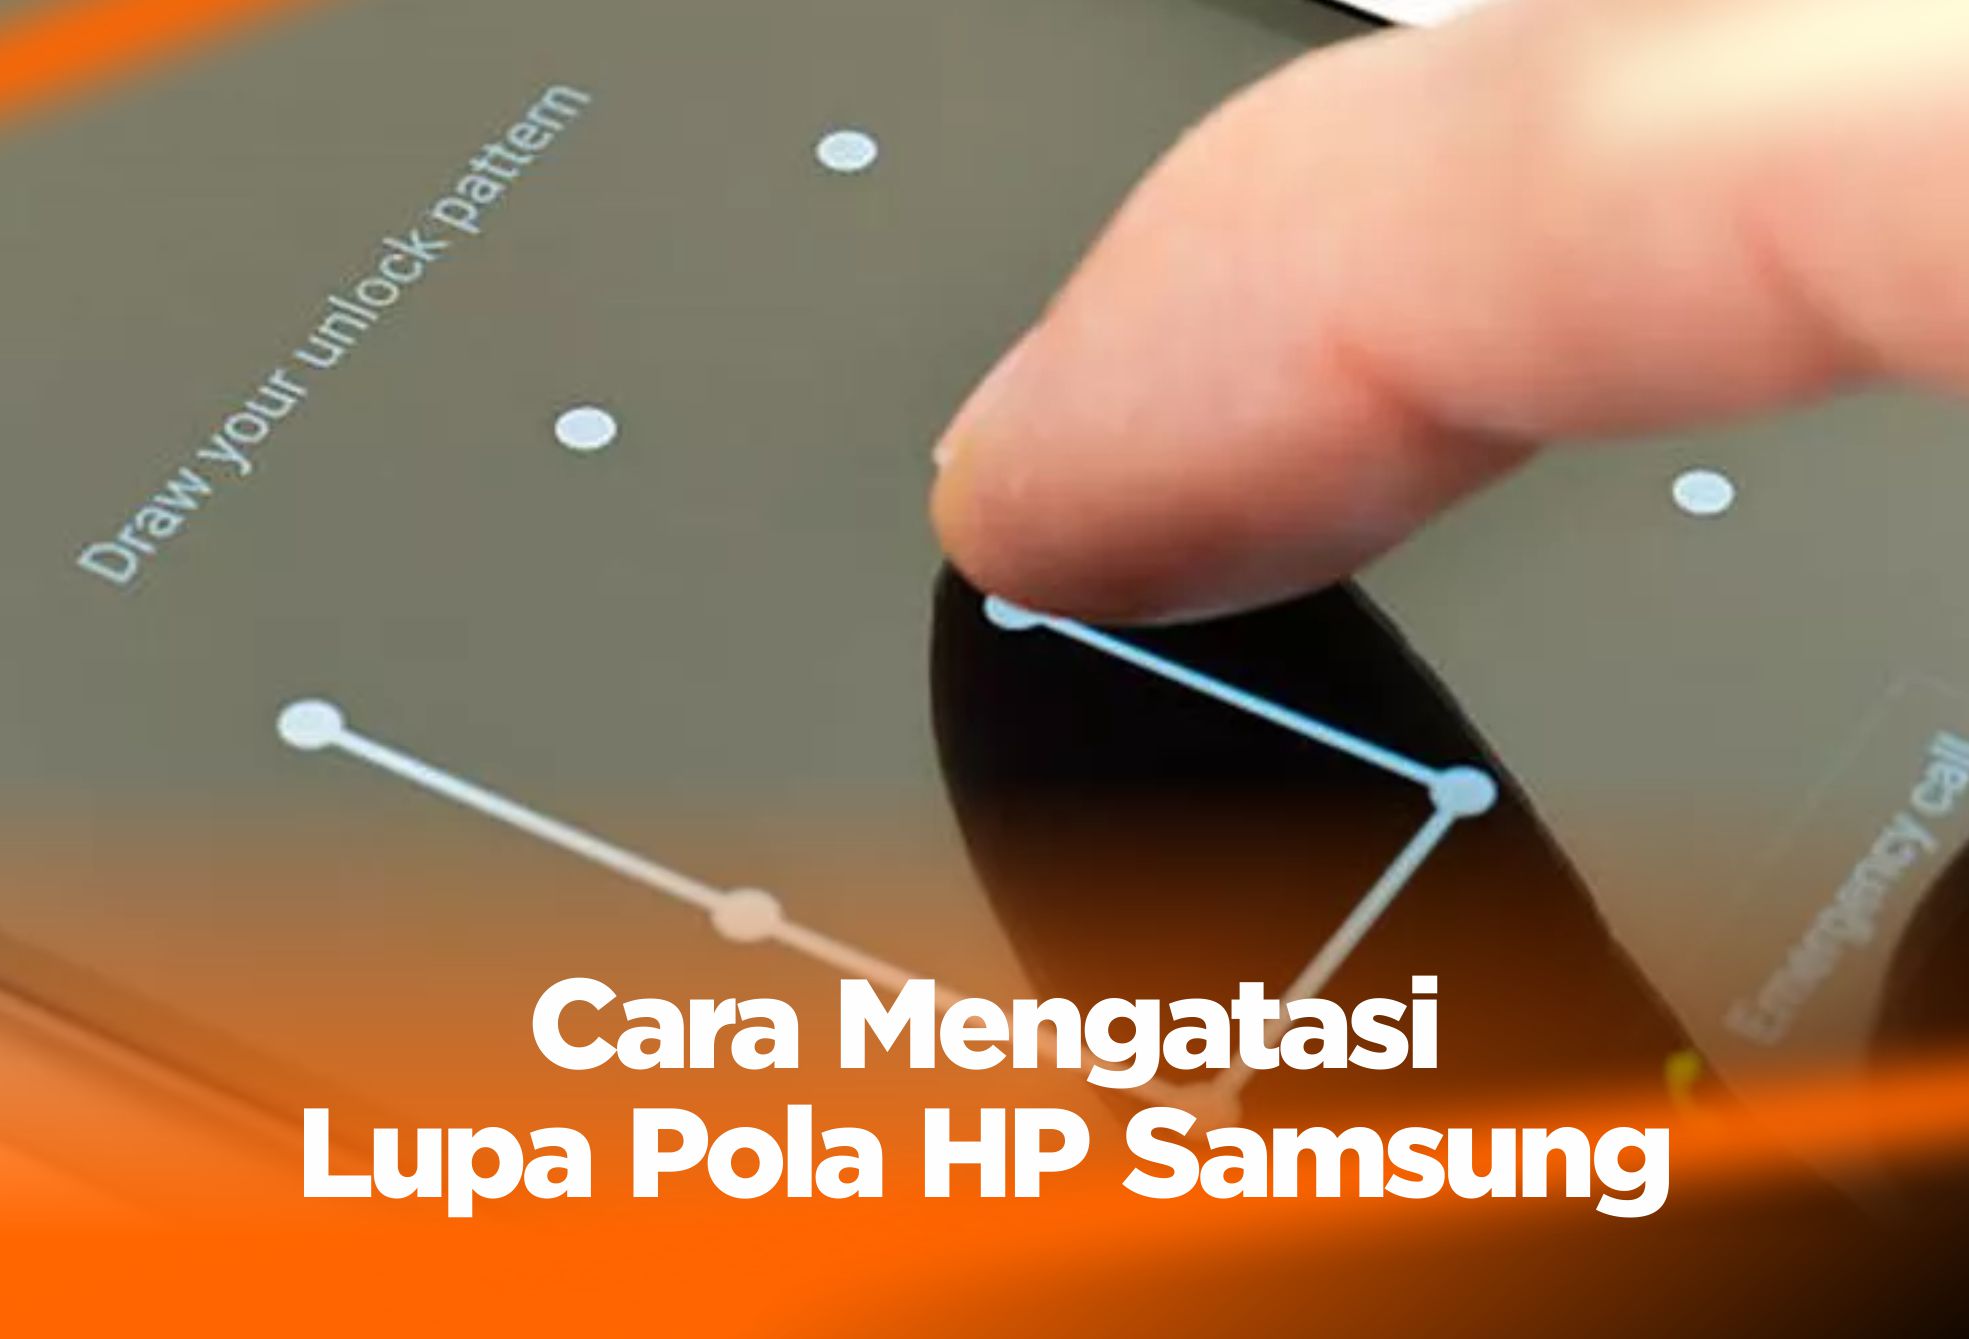 Cara Mengatasi Lupa Pola HP Samsung, Ternyata Mudah !